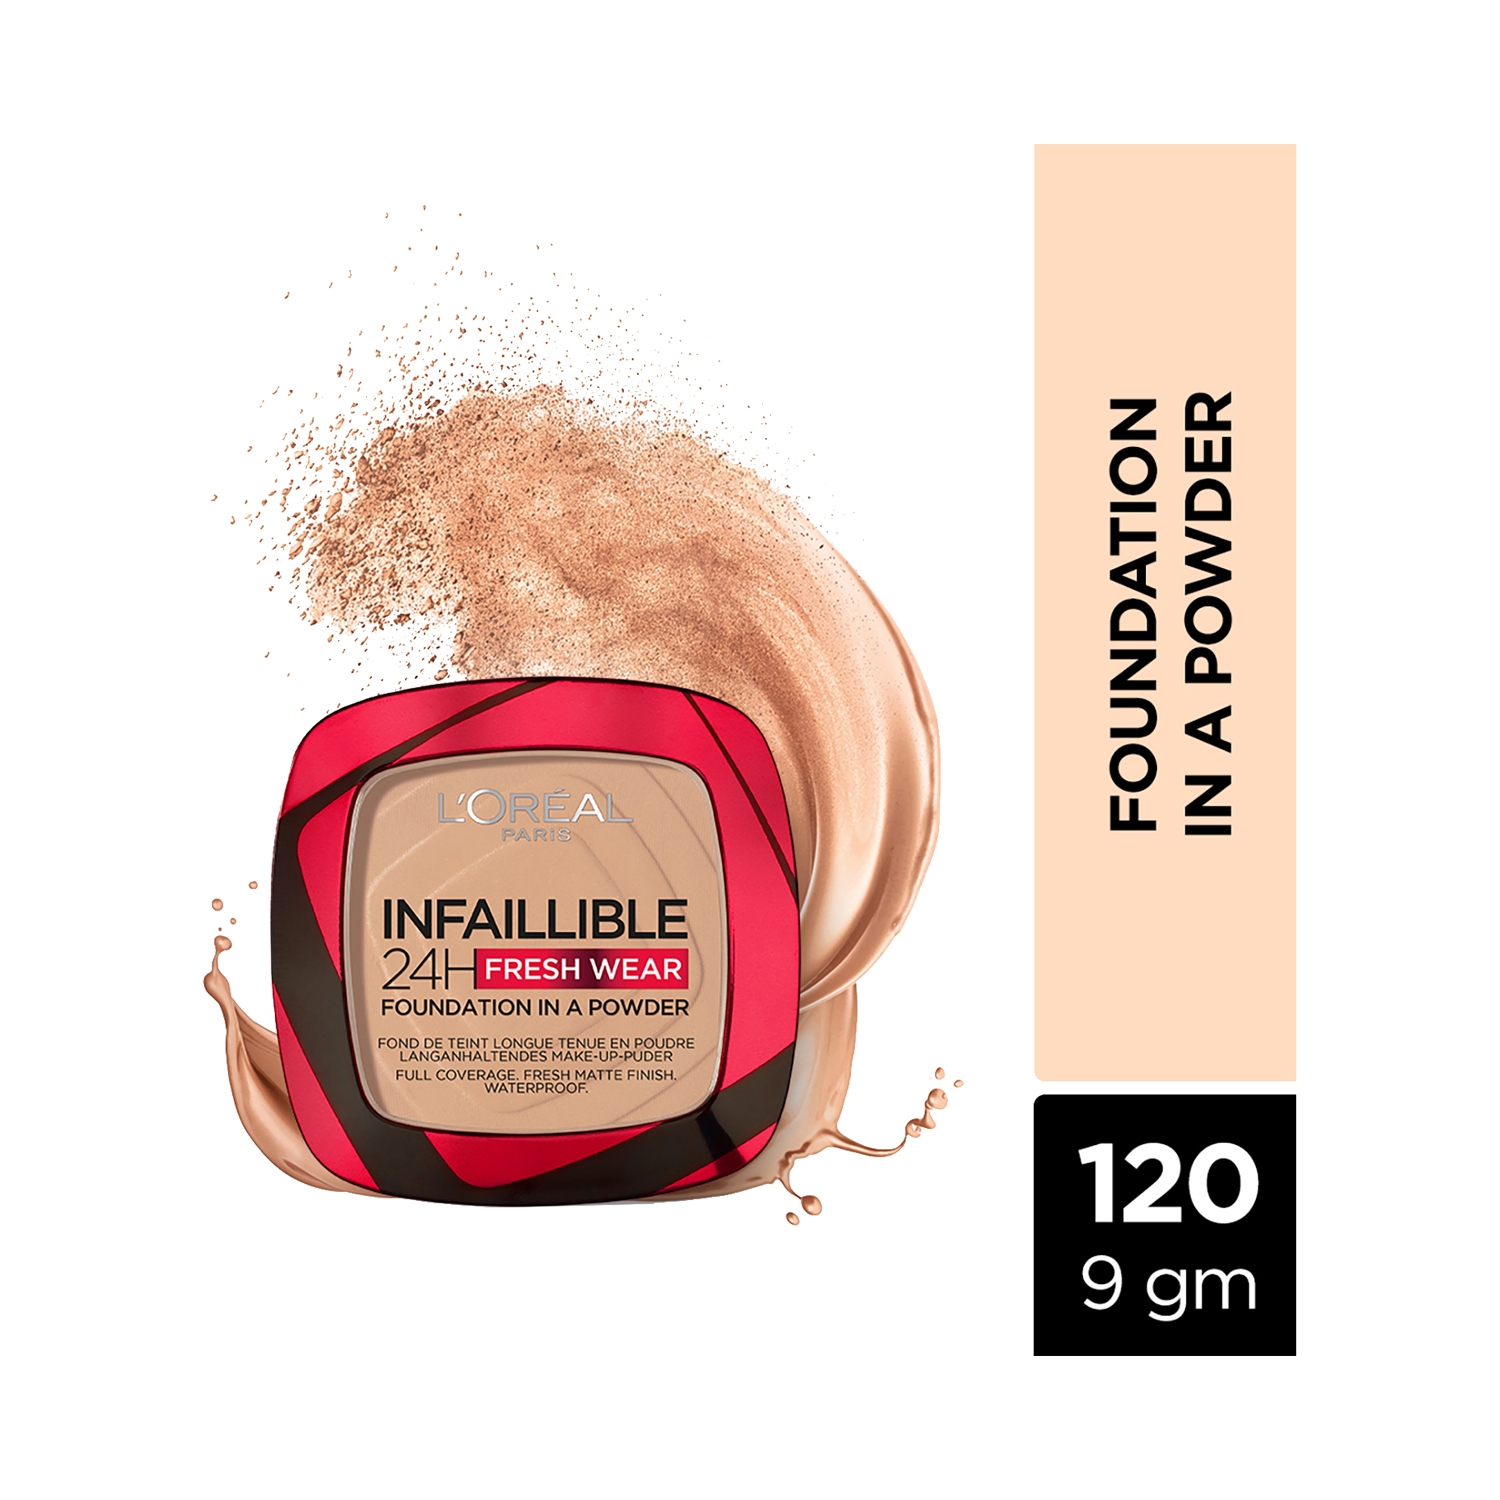 L'Oreal Paris | L'Oreal Paris Infallible 24H Fresh Wear Foundation In A Powder - 120 Vanilla (9g)